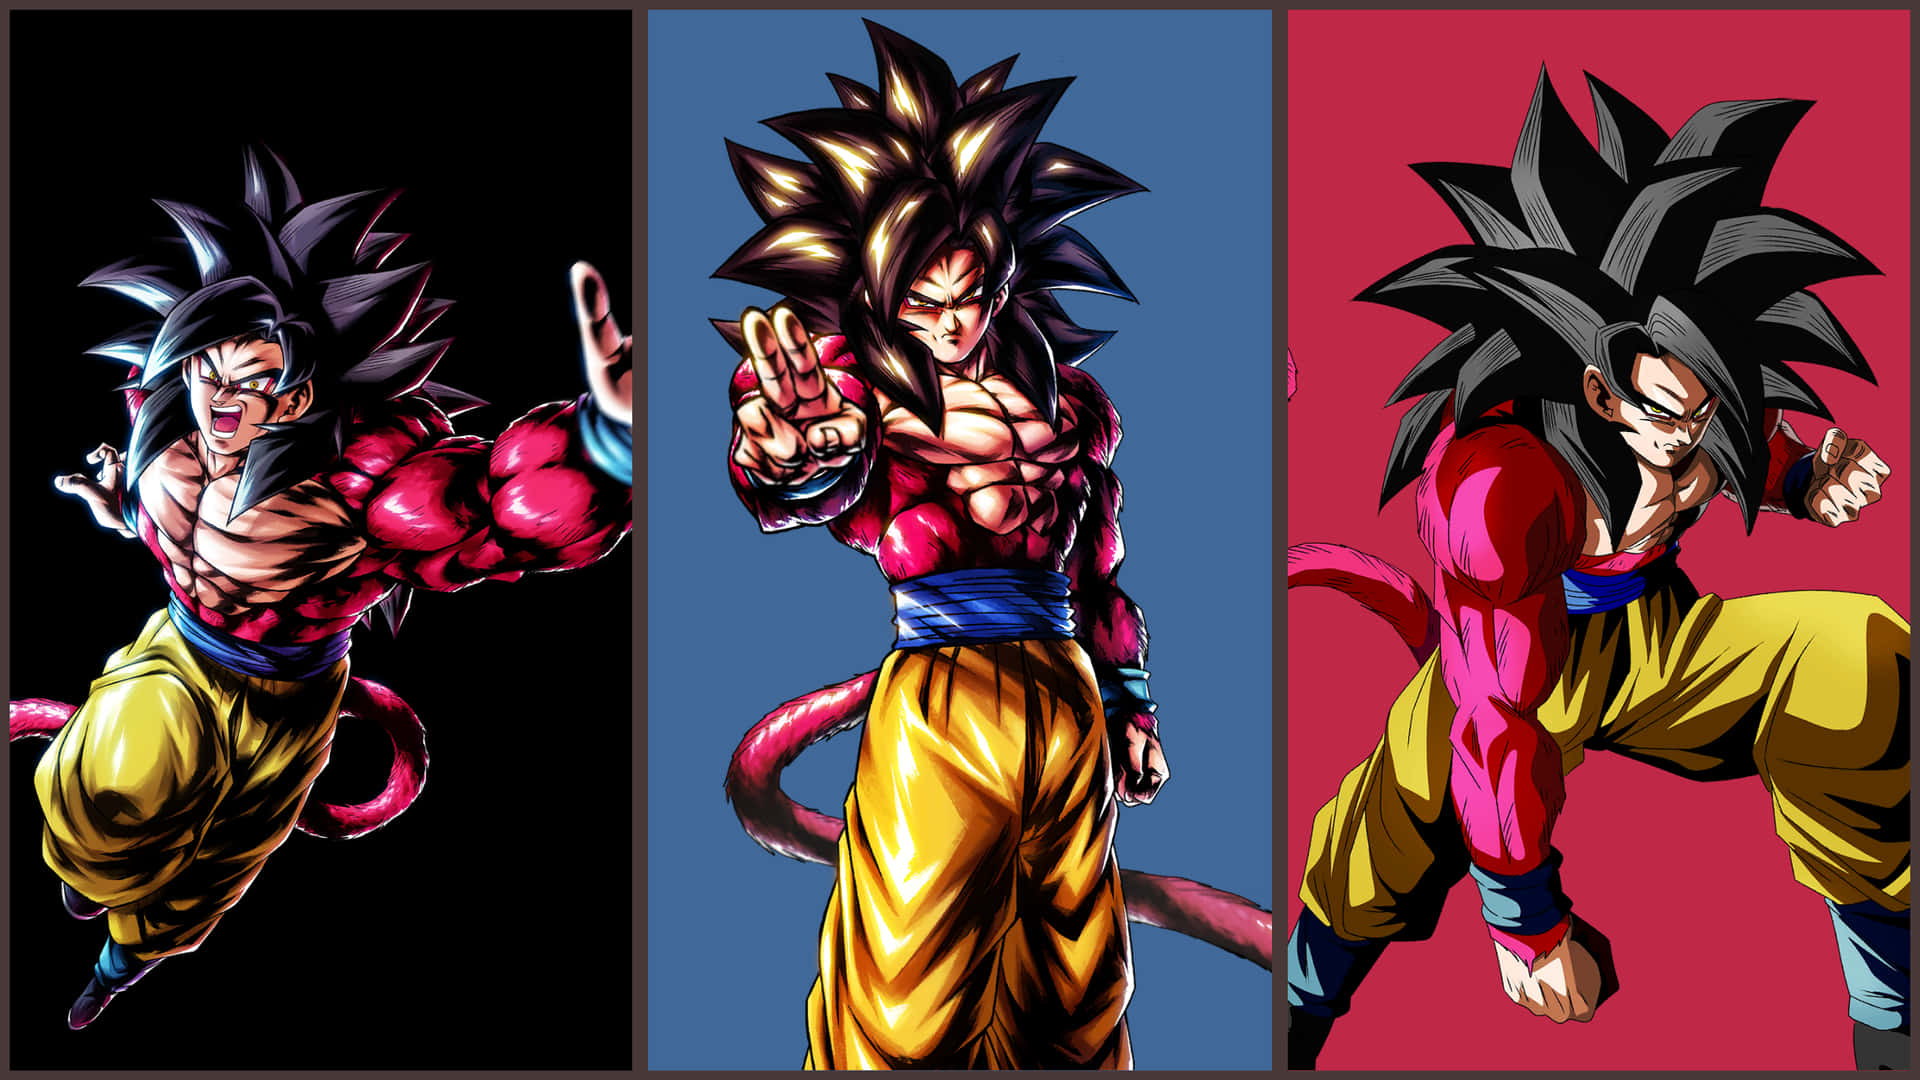 Goku i Super Saiyan 4 form. Wallpaper